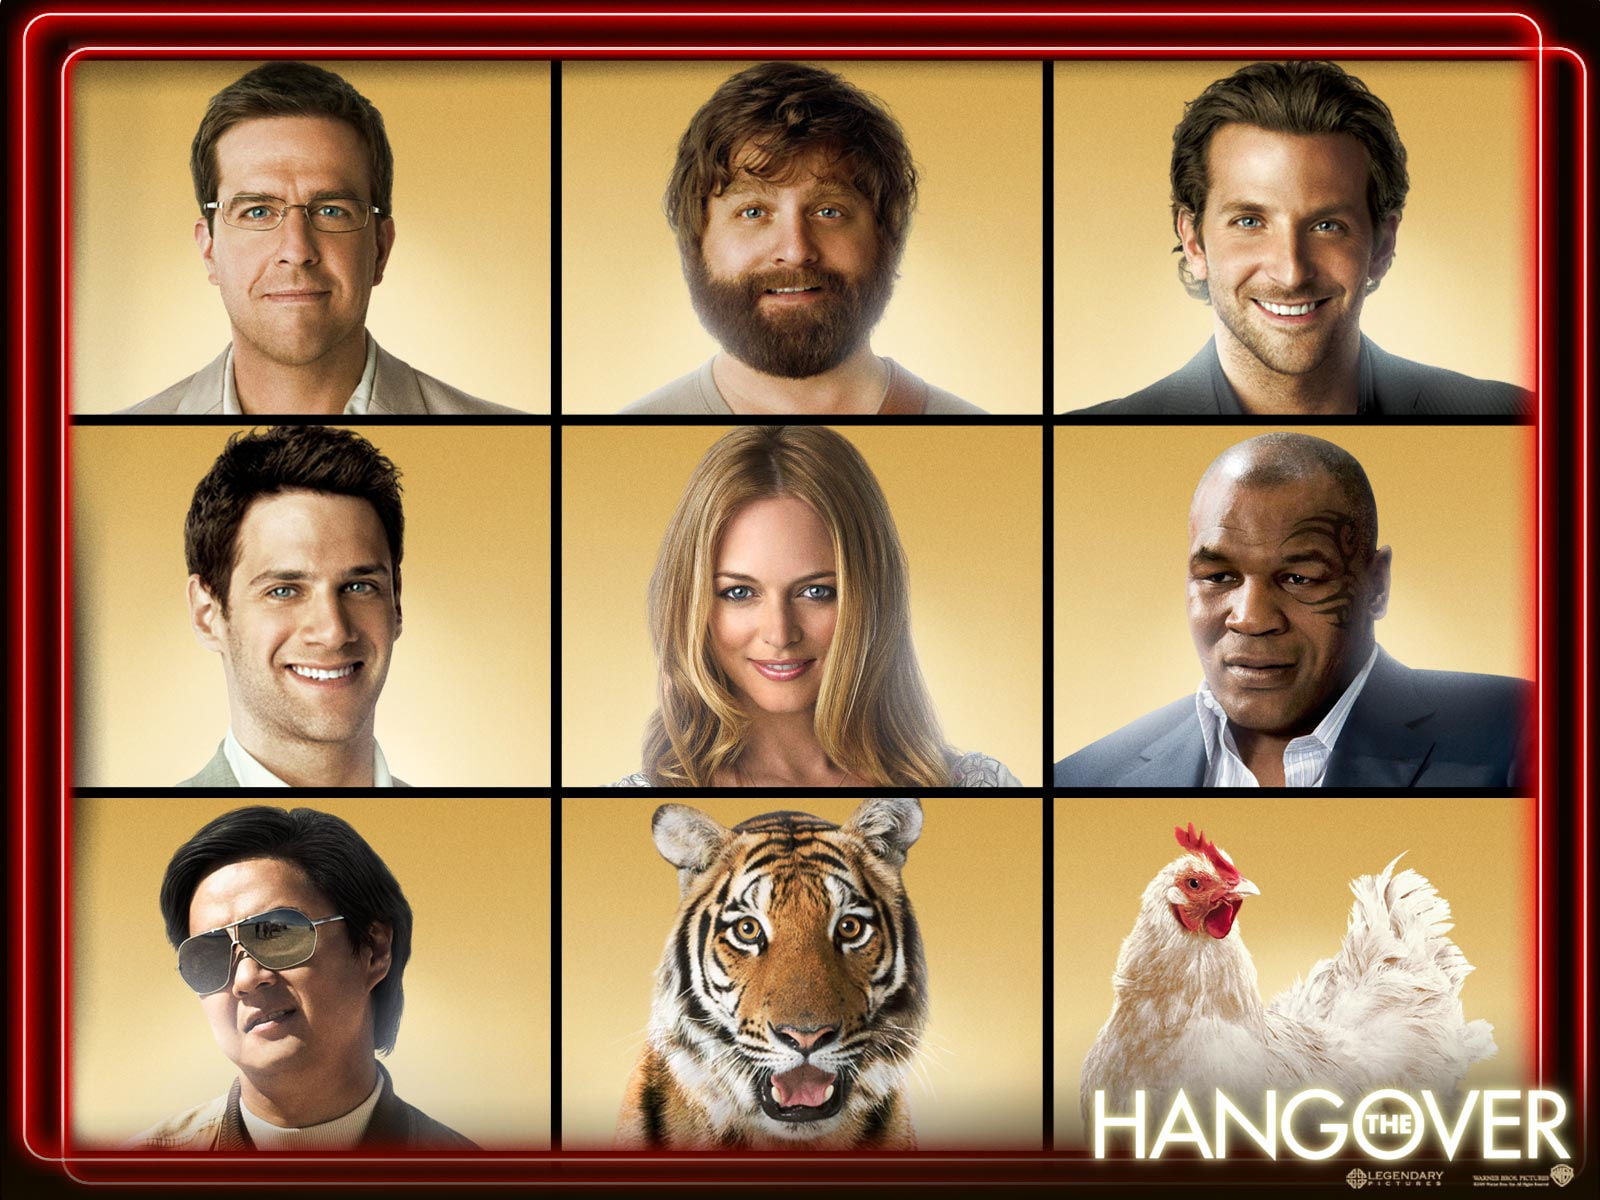 The Hangover digital wallpaper, Vegas, Bachelor party, actors